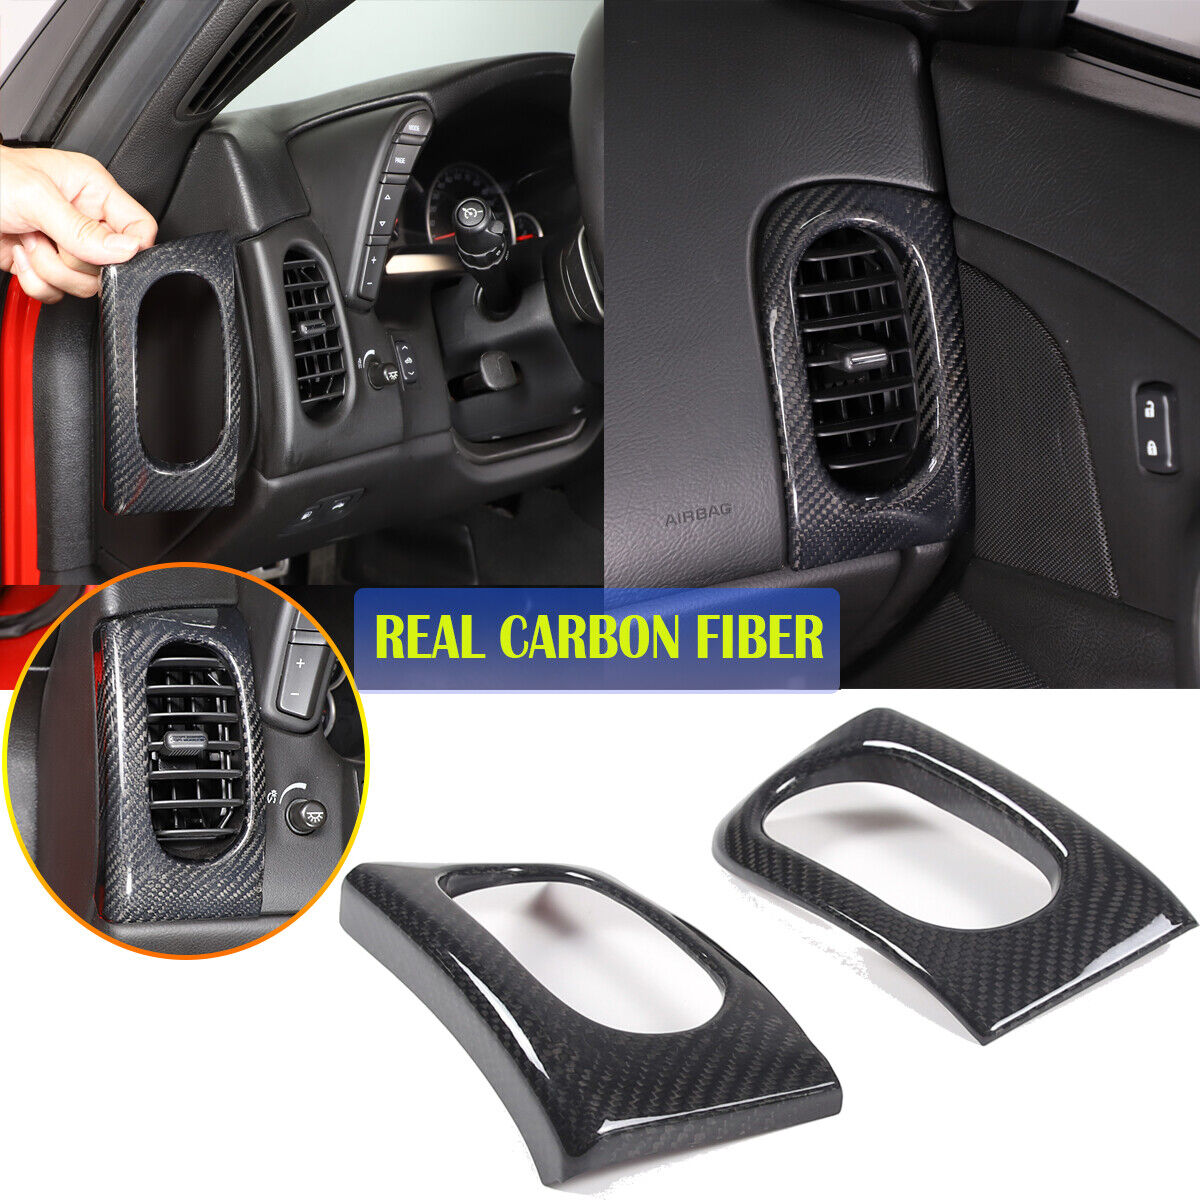 Real Dry Carbon fiber Side Air Outlet Vent Panel Trim For Corvette C6 2005-13